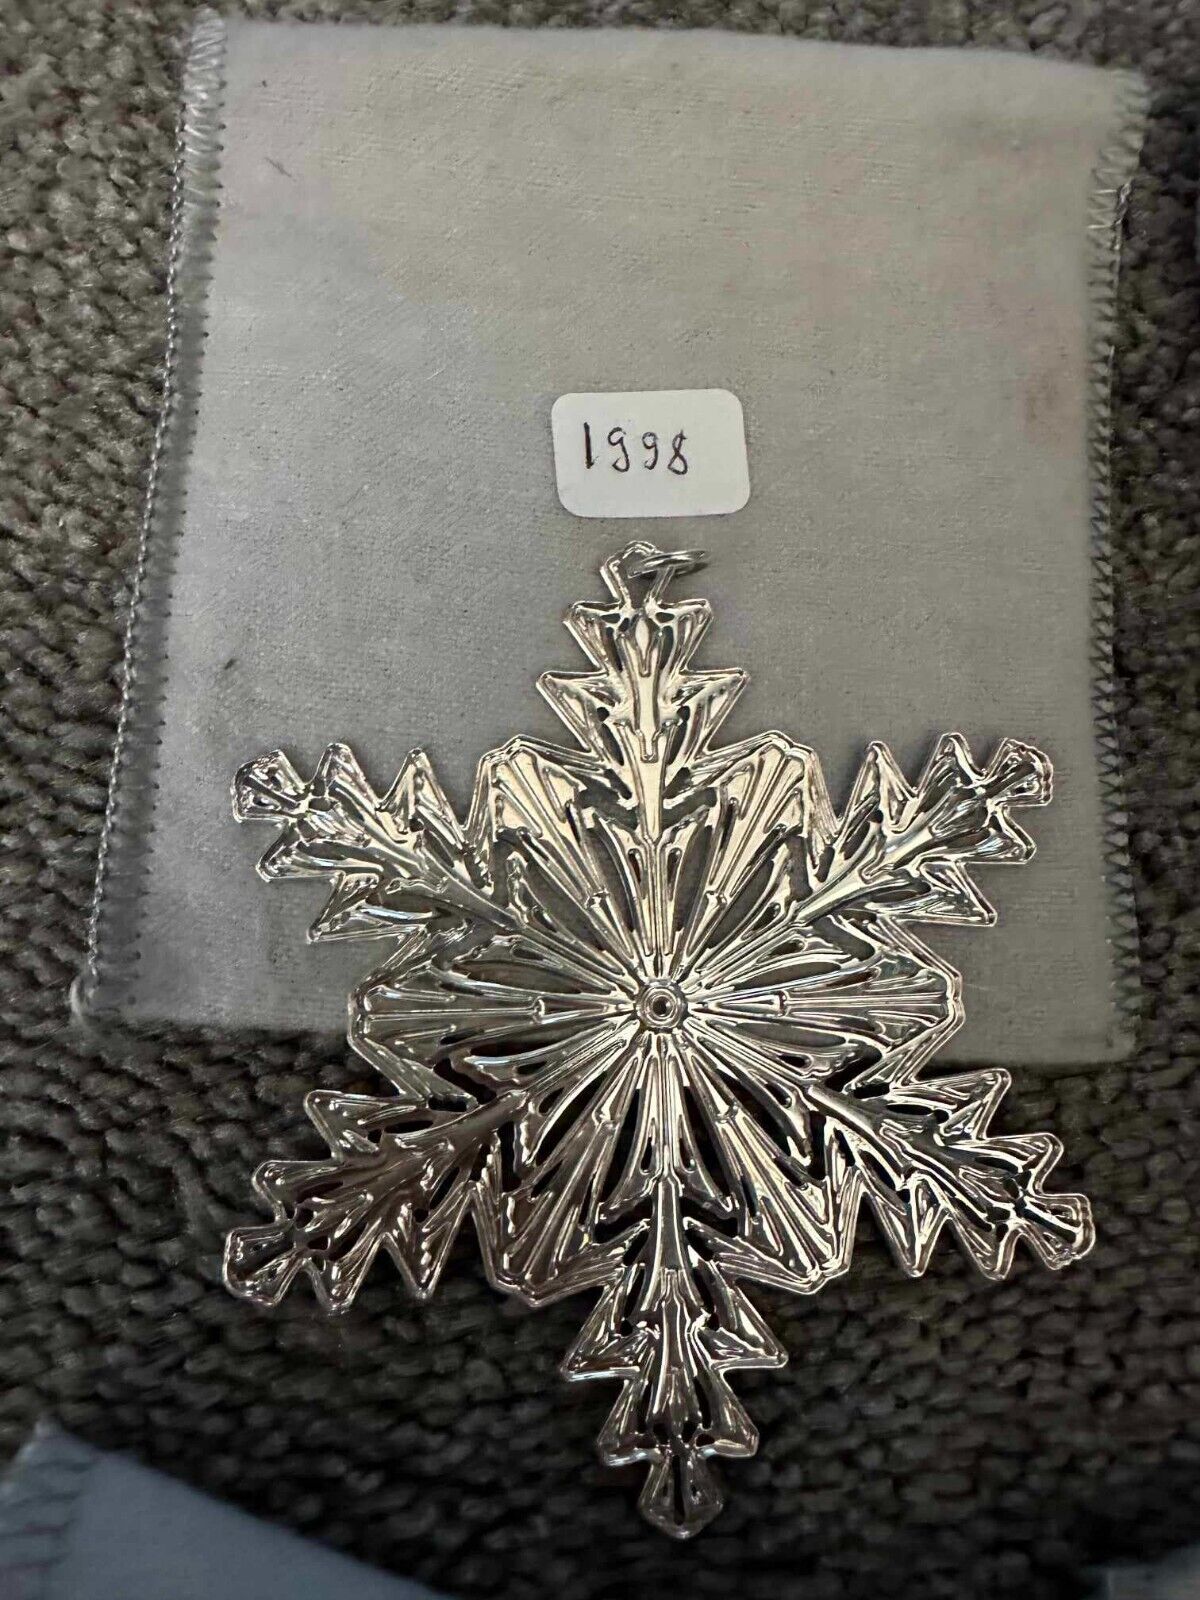 Metropolitan Museum of Art (MMA) Silverplate Ornaments Snowflakes, 1998-2018